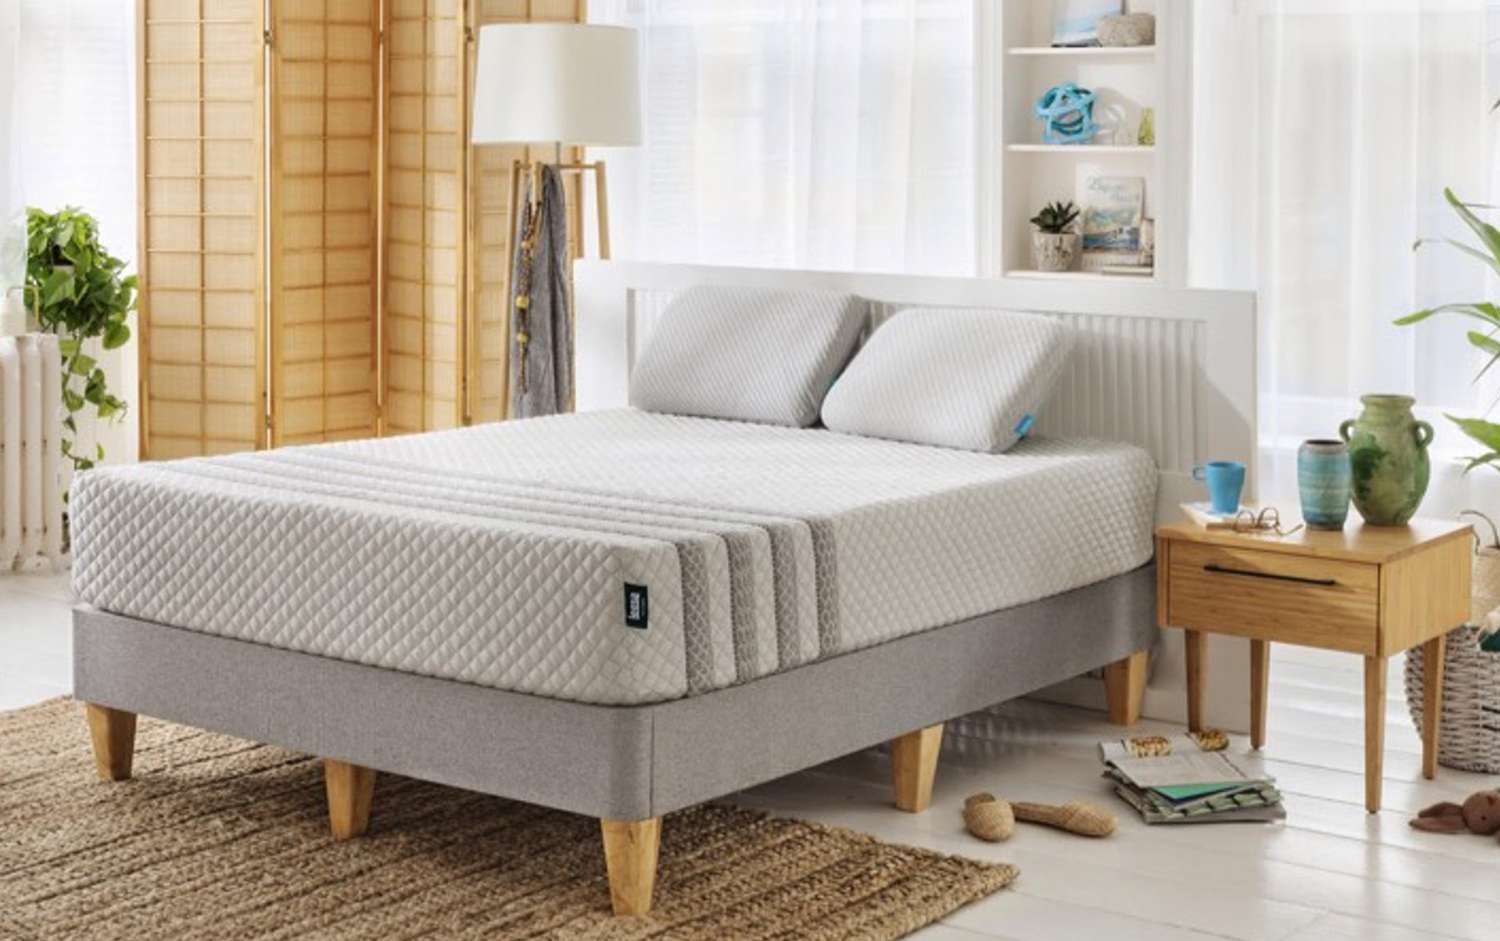 hybrid mattress that is california safe